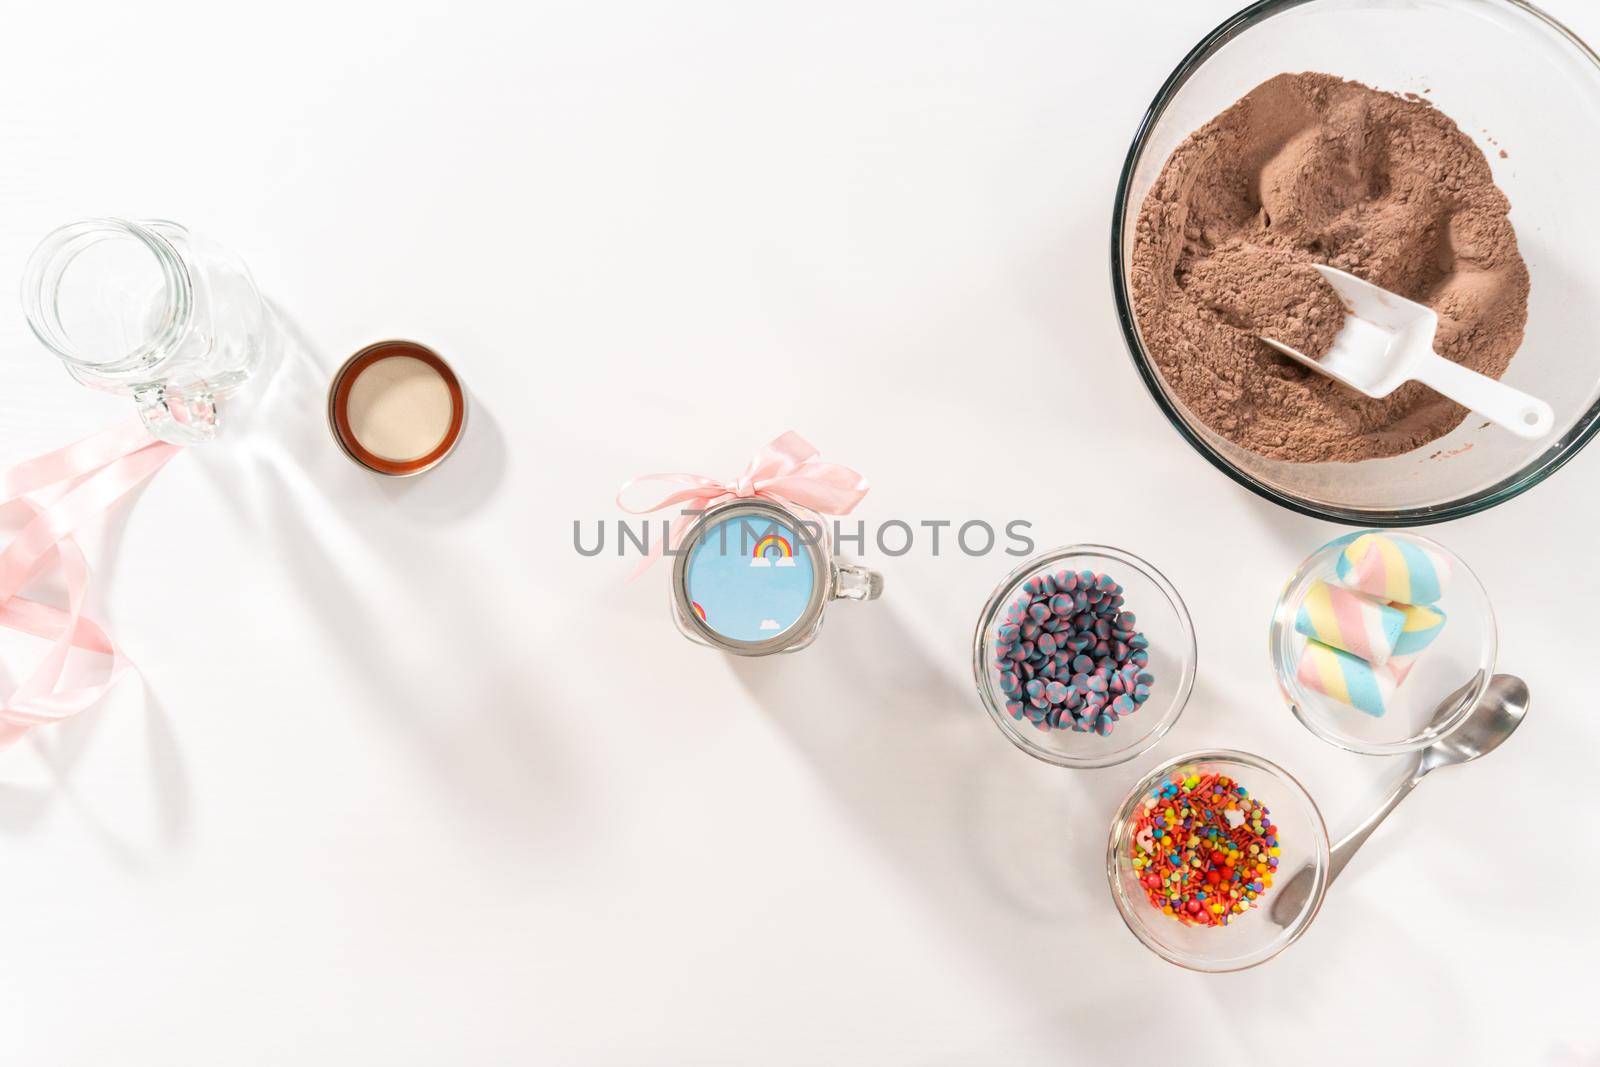 Unicorn hot chocolate mix by arinahabich